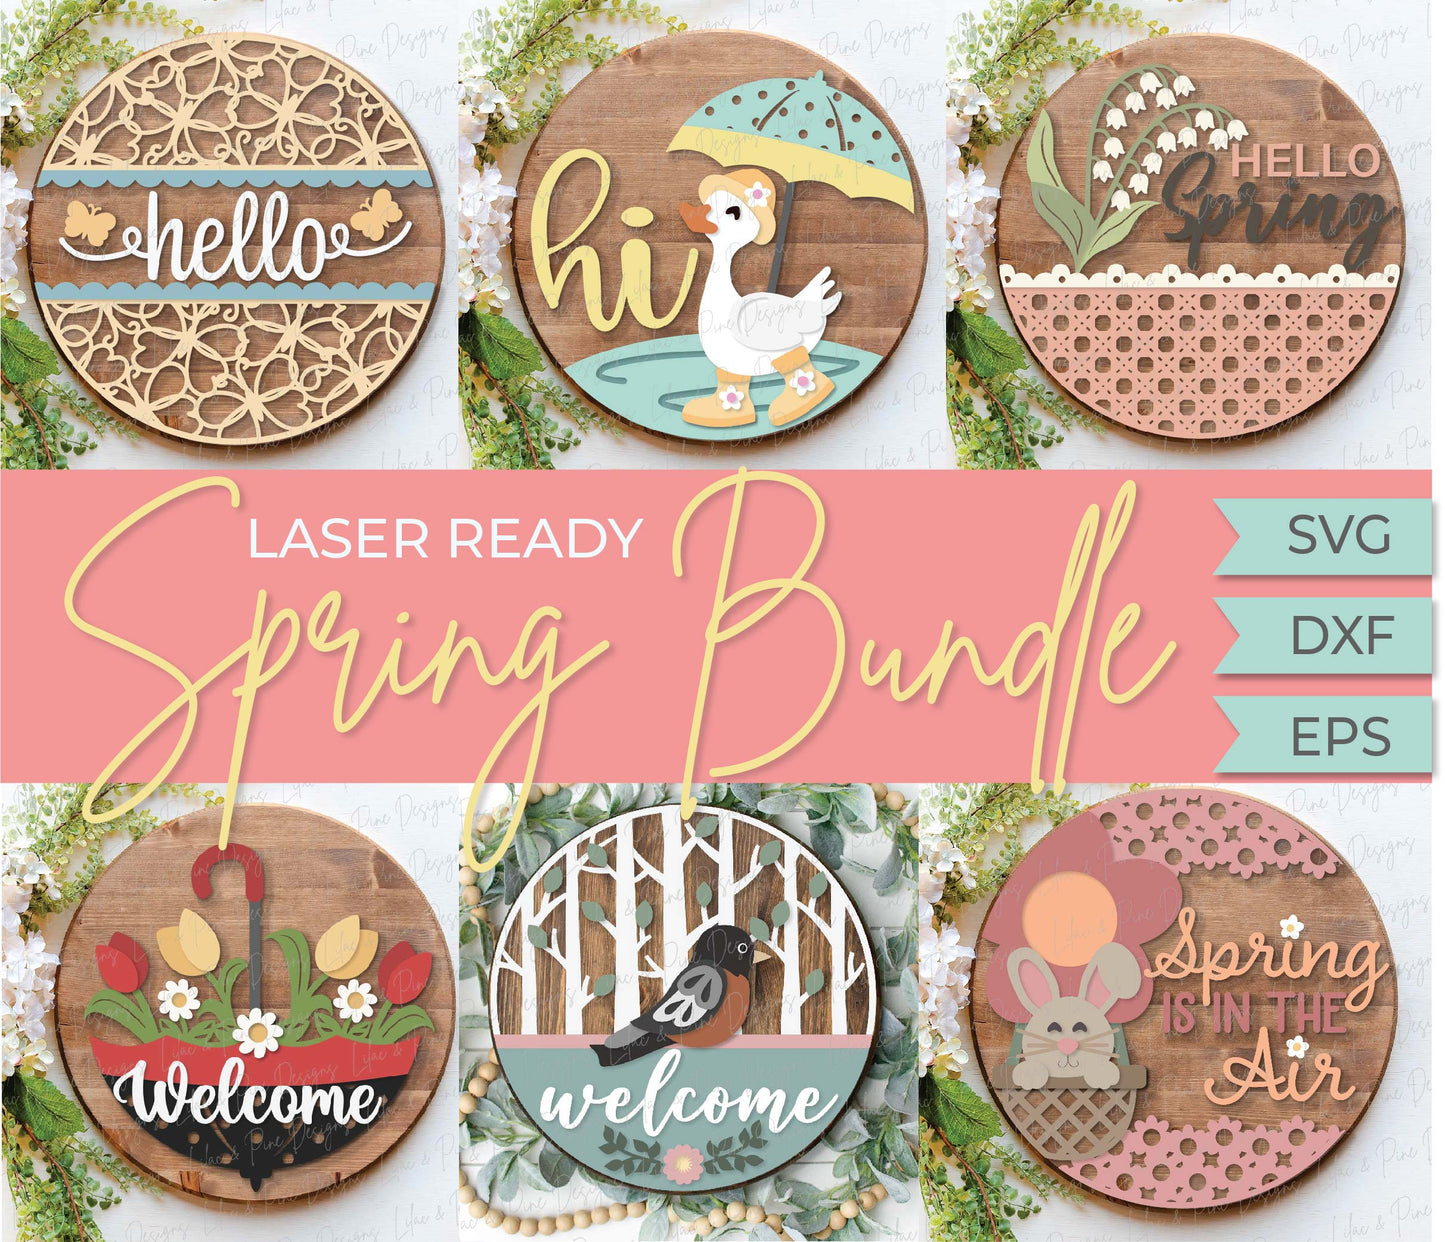 Spring and Easter Door Hanger Bundle - 19 Designs - Volume 3